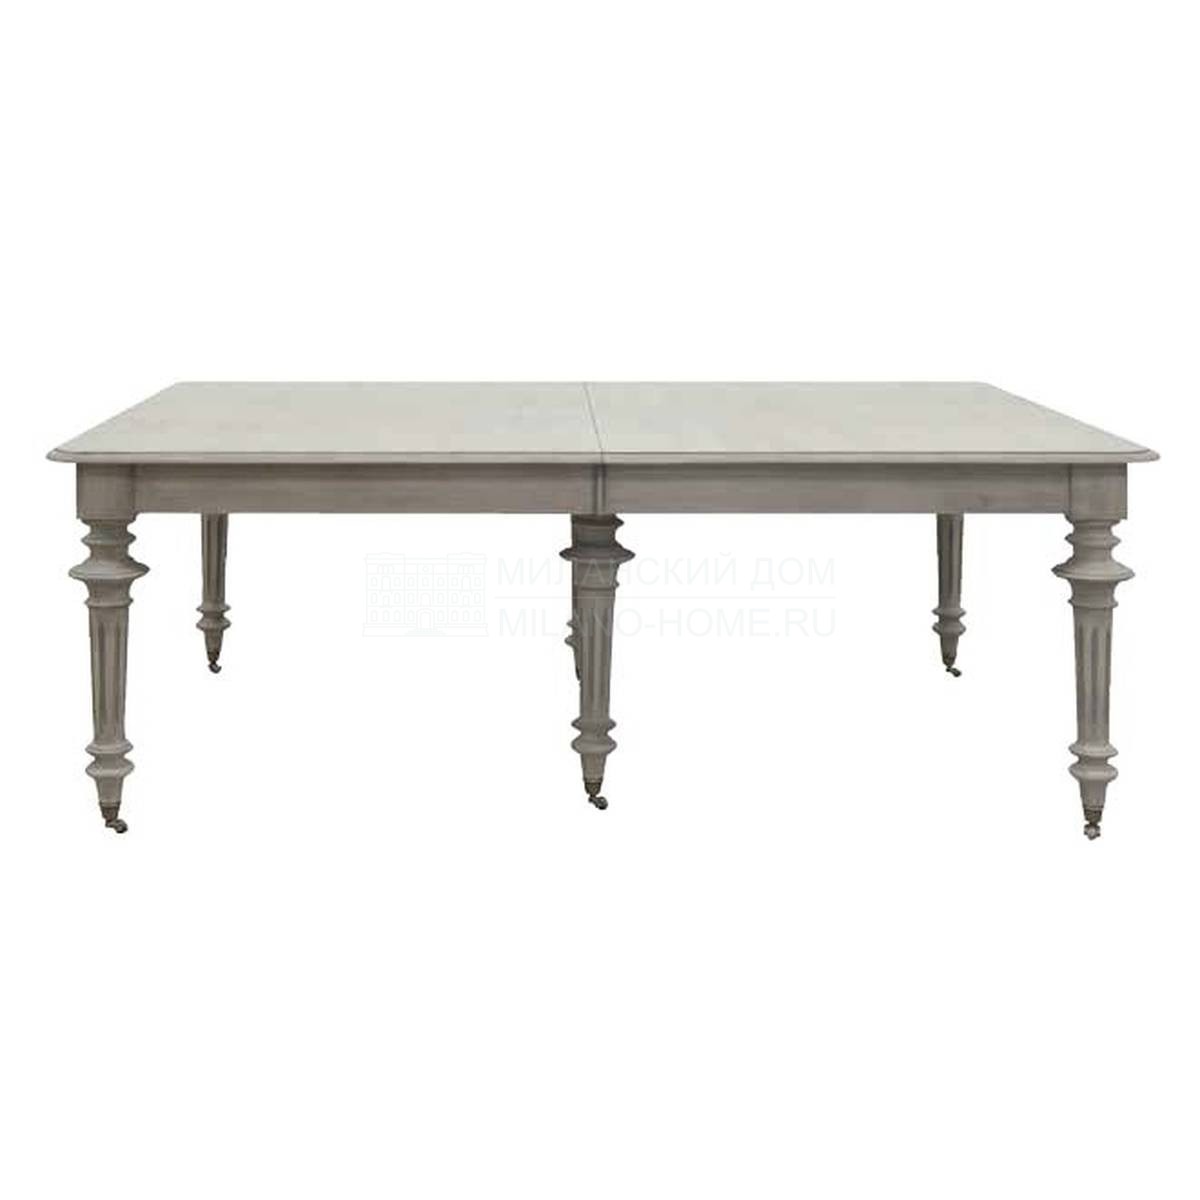 Обеденный стол El Mueble Clasico/M 1052 из Испании фабрики GUADARTE